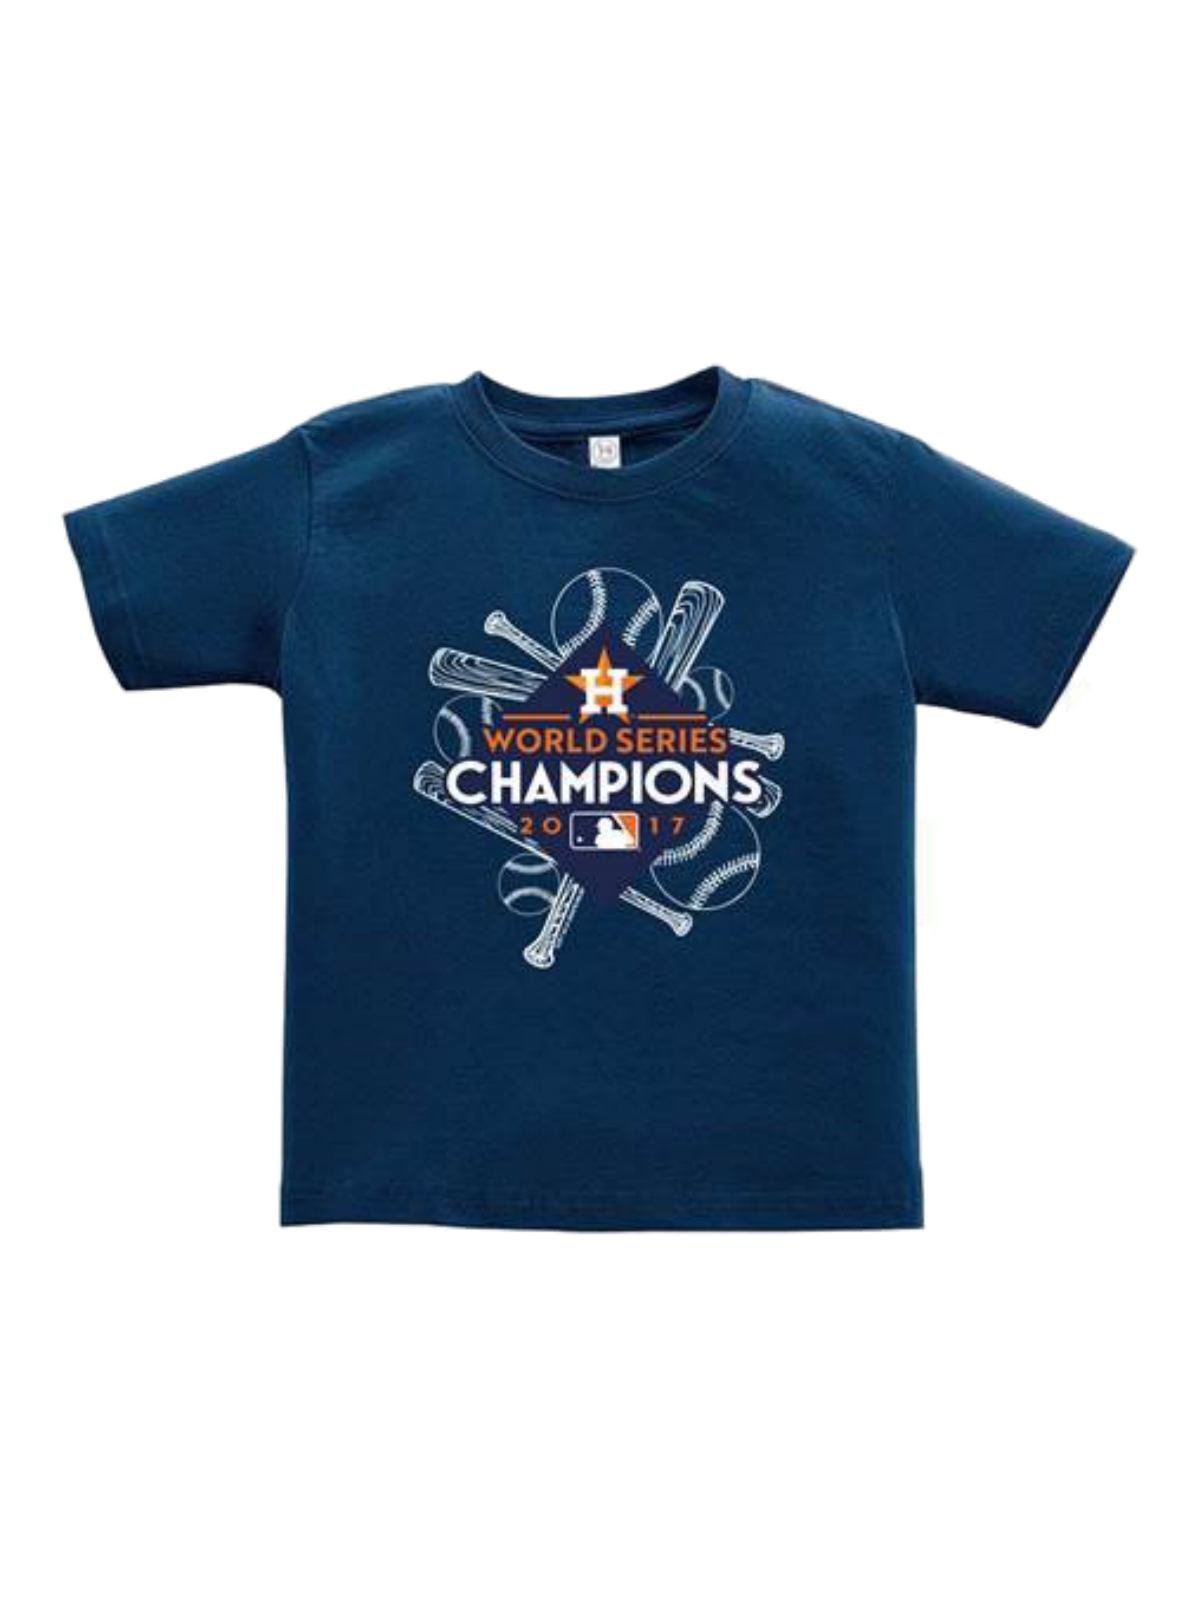 astros 2017 world series champions shirt